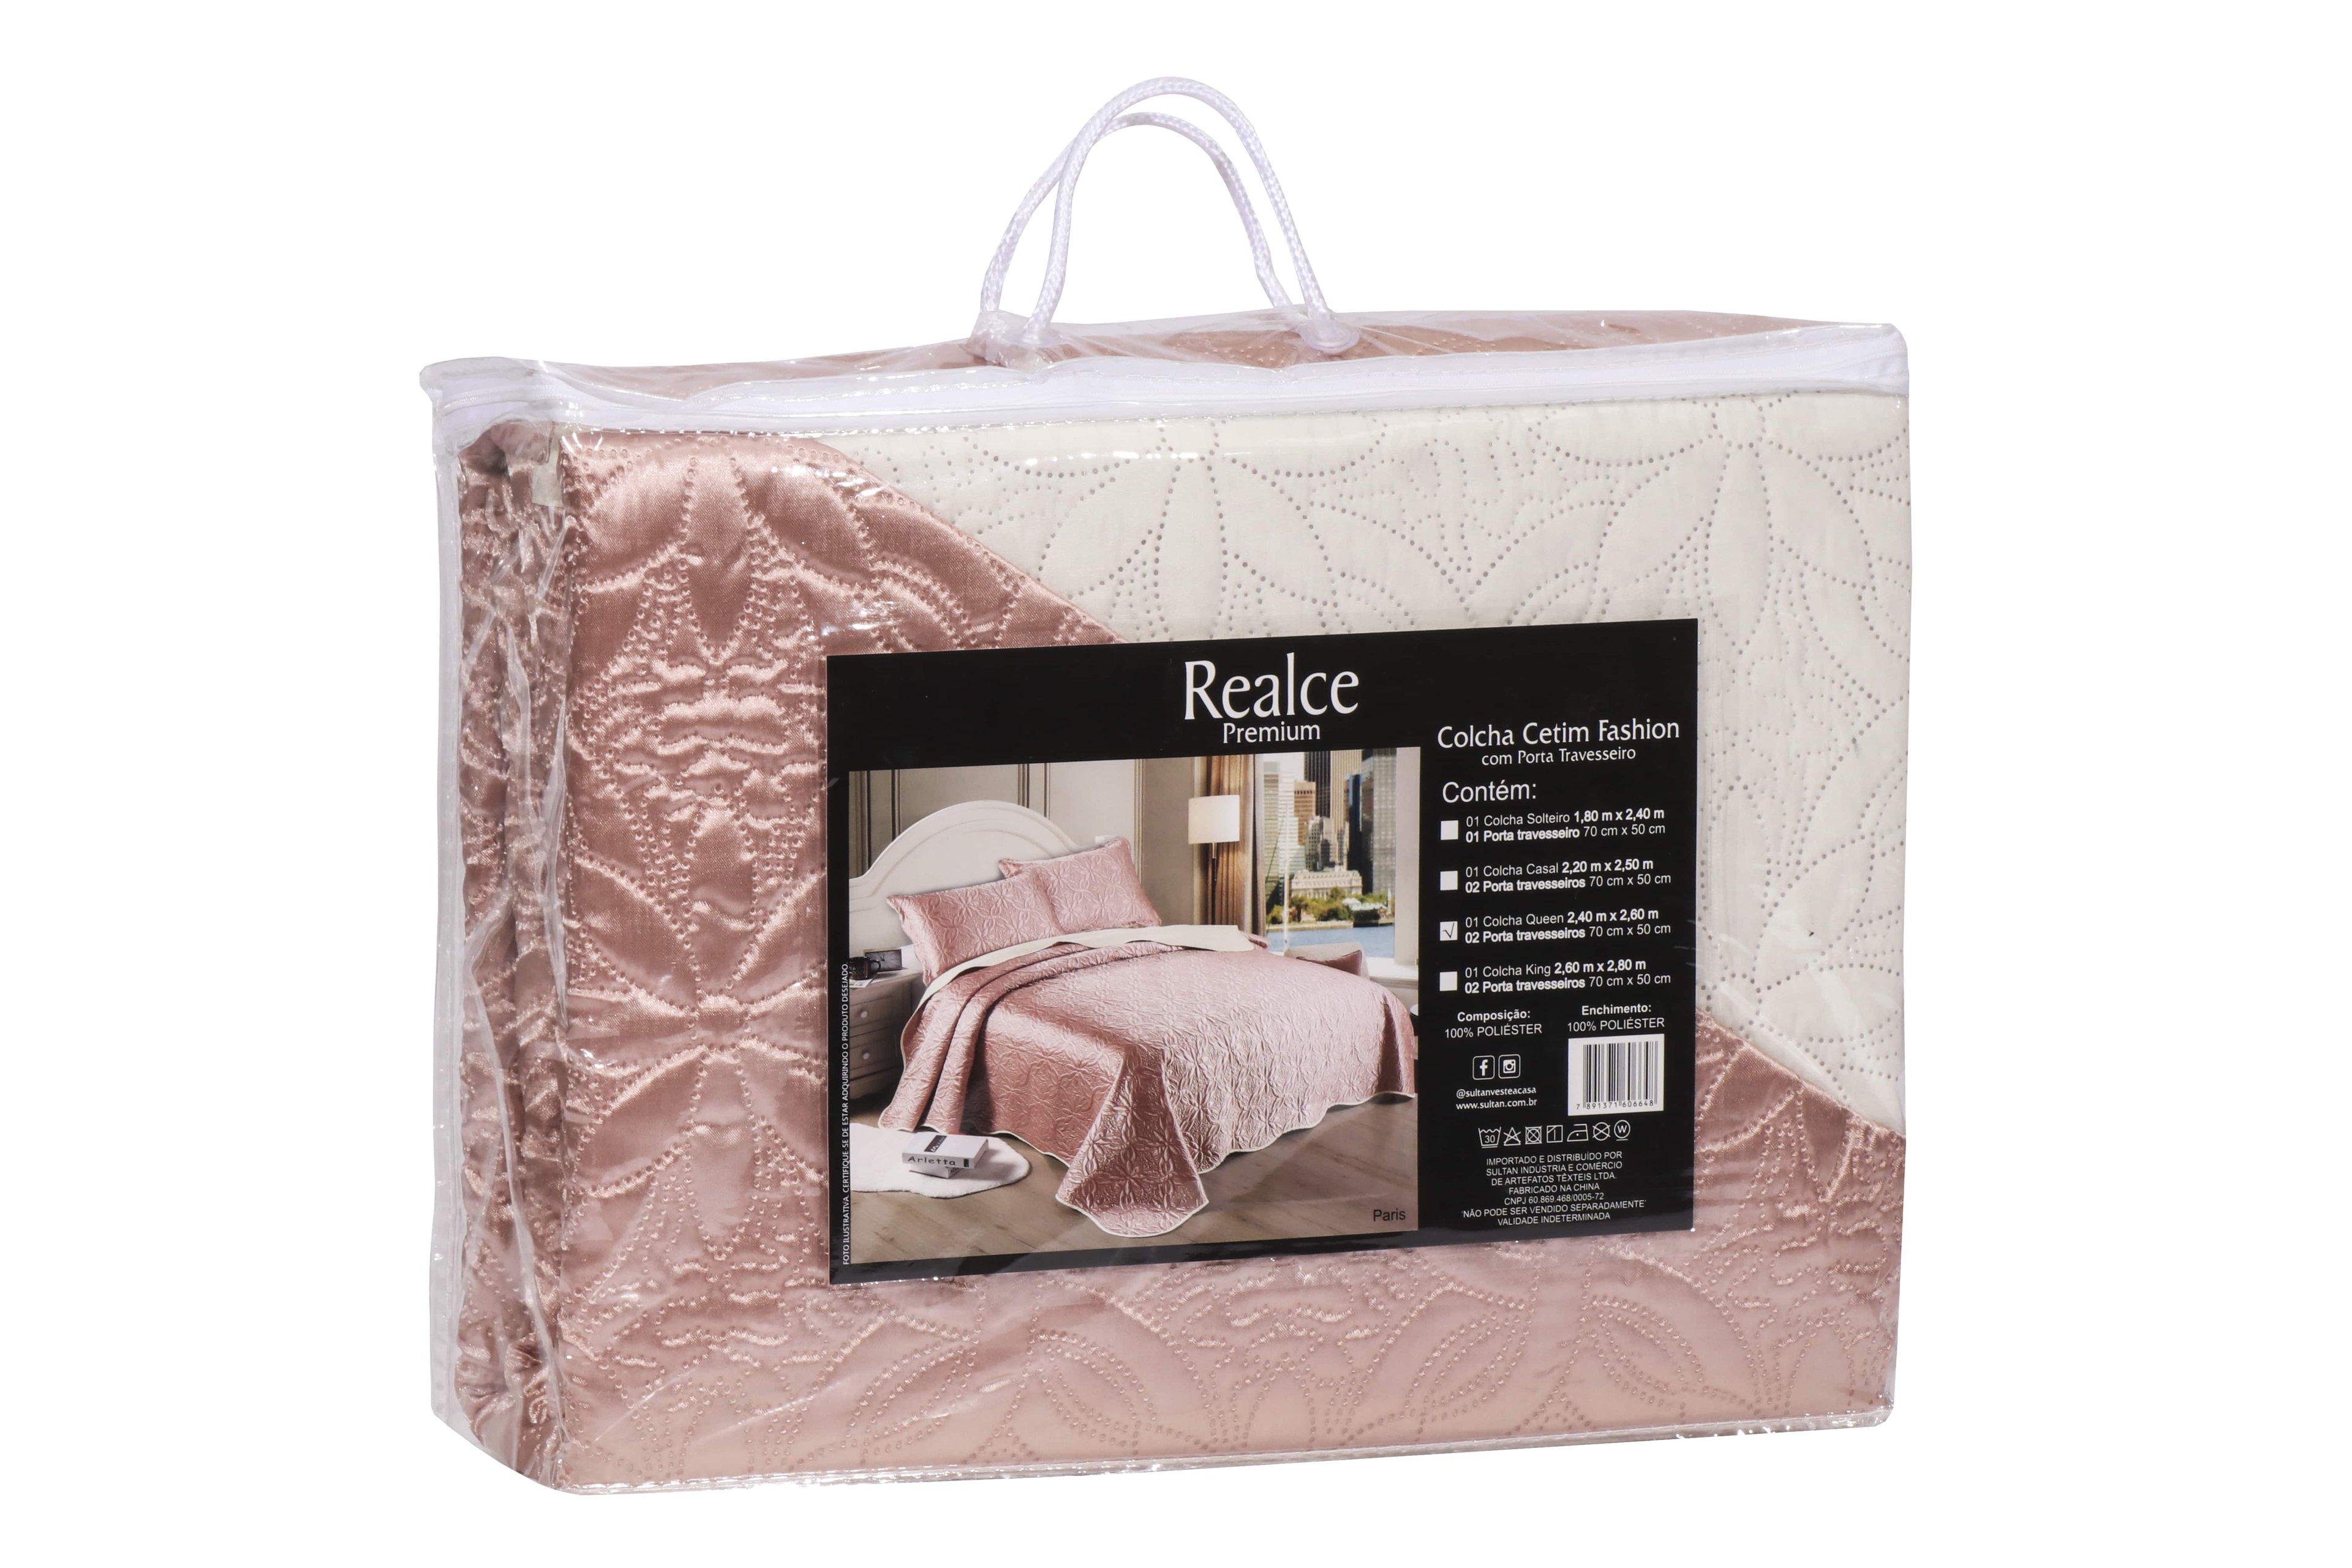 Colcha De Cetim King Size Com Porta Travesseiro Fashion Luxo:Rosa - 3